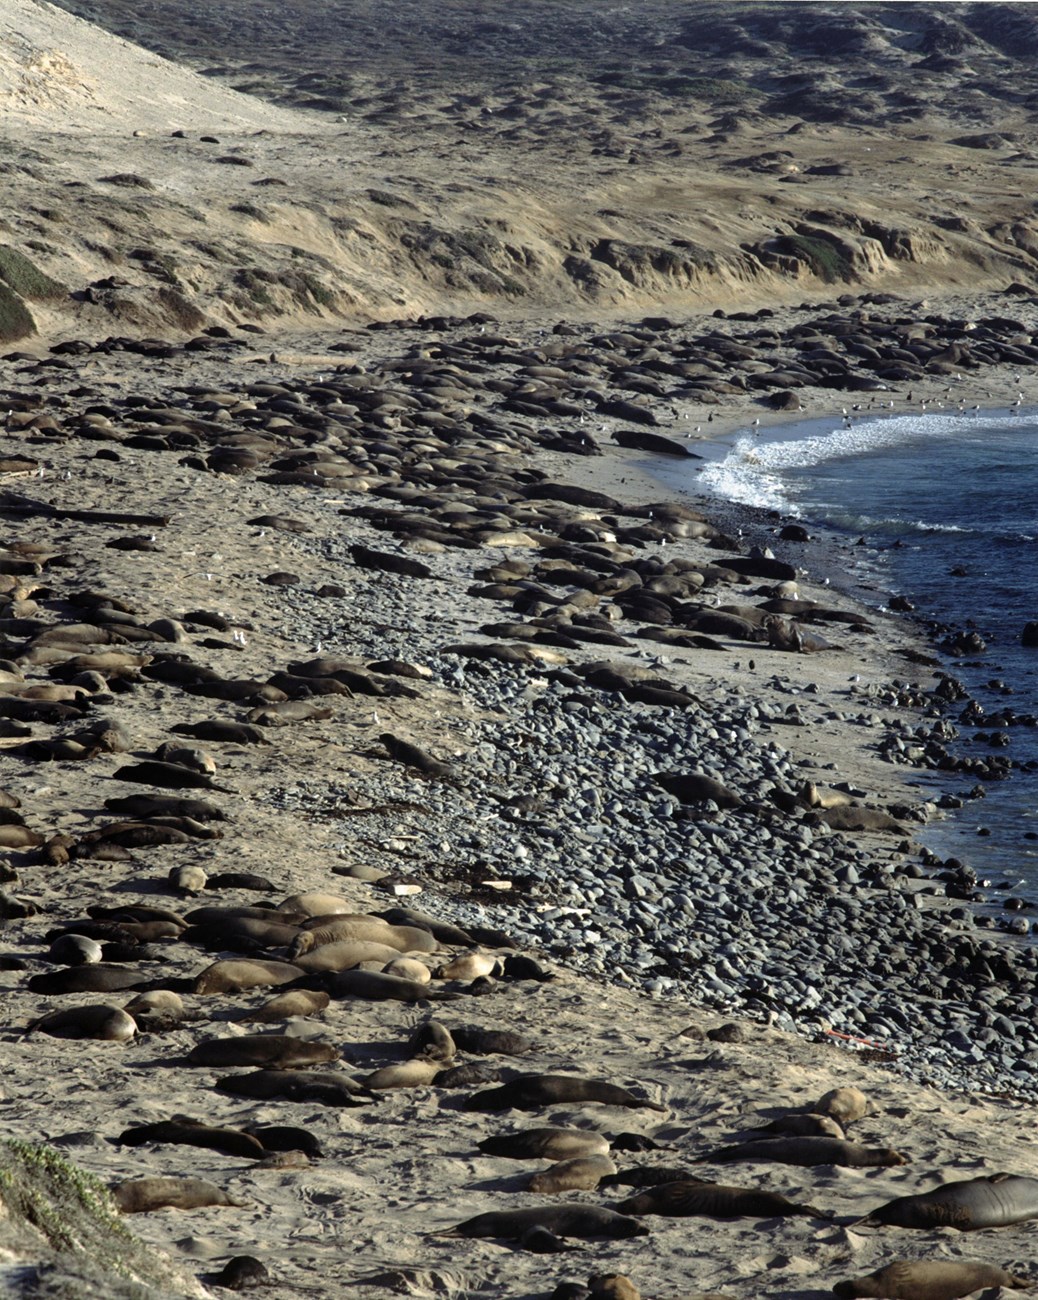 Elephant seals on San Nicolas Island beach. Courtesy of Steve Schwartz.